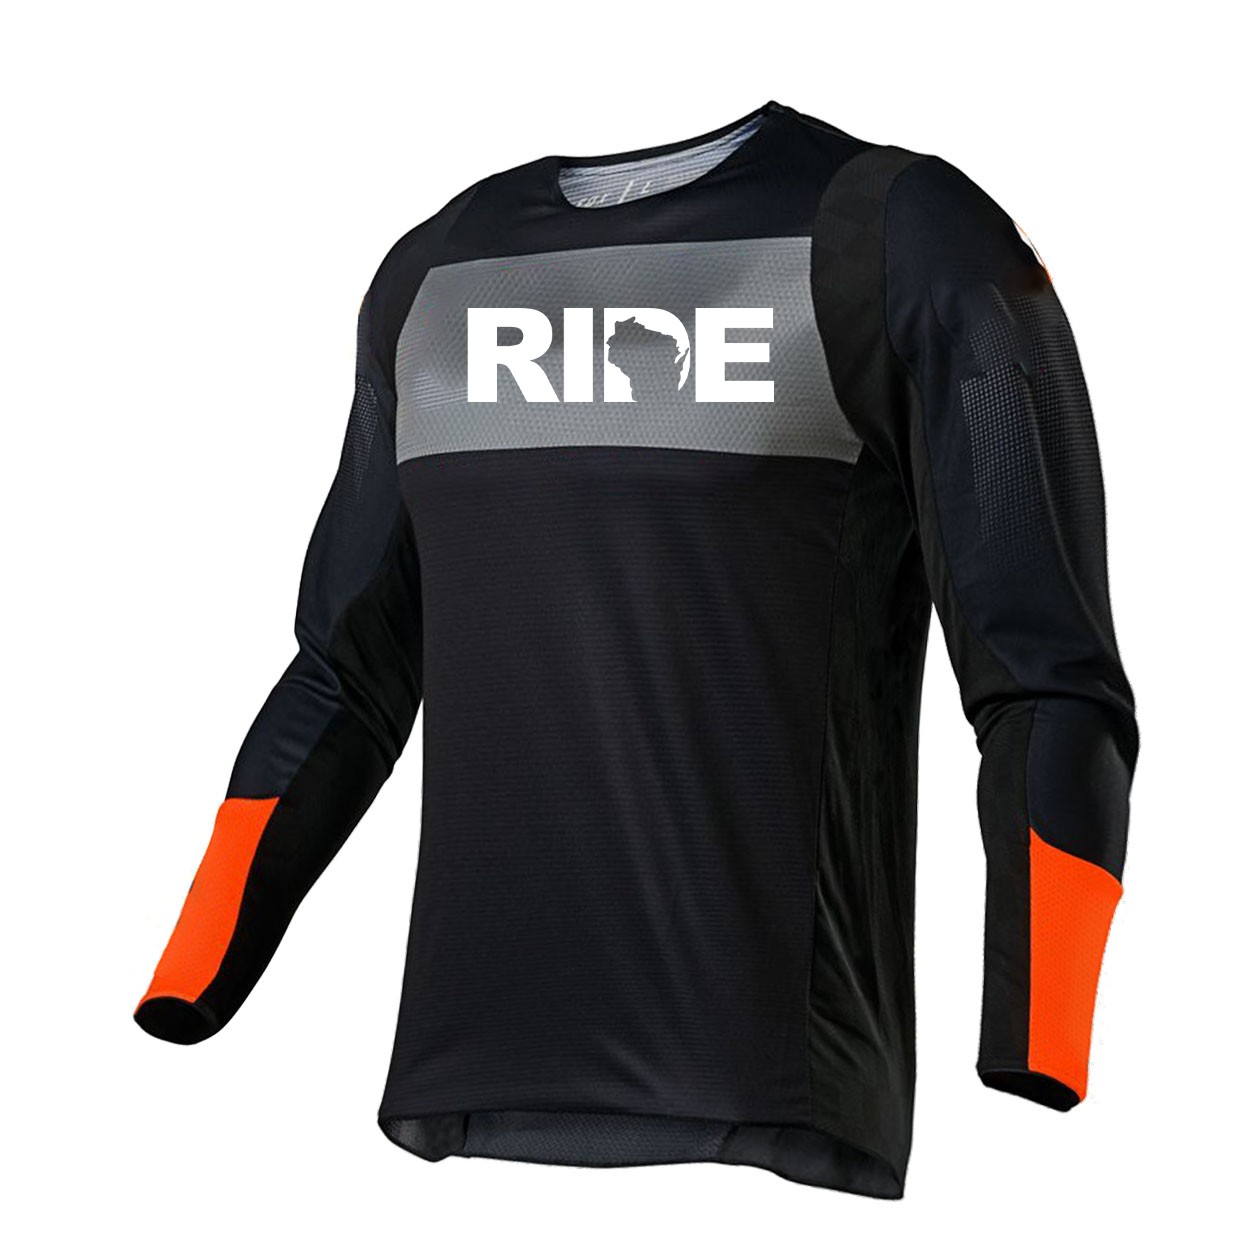 Ride Wisconsin Classic Performance Jersey Long Sleeve Shirt Black/Gray/Orange